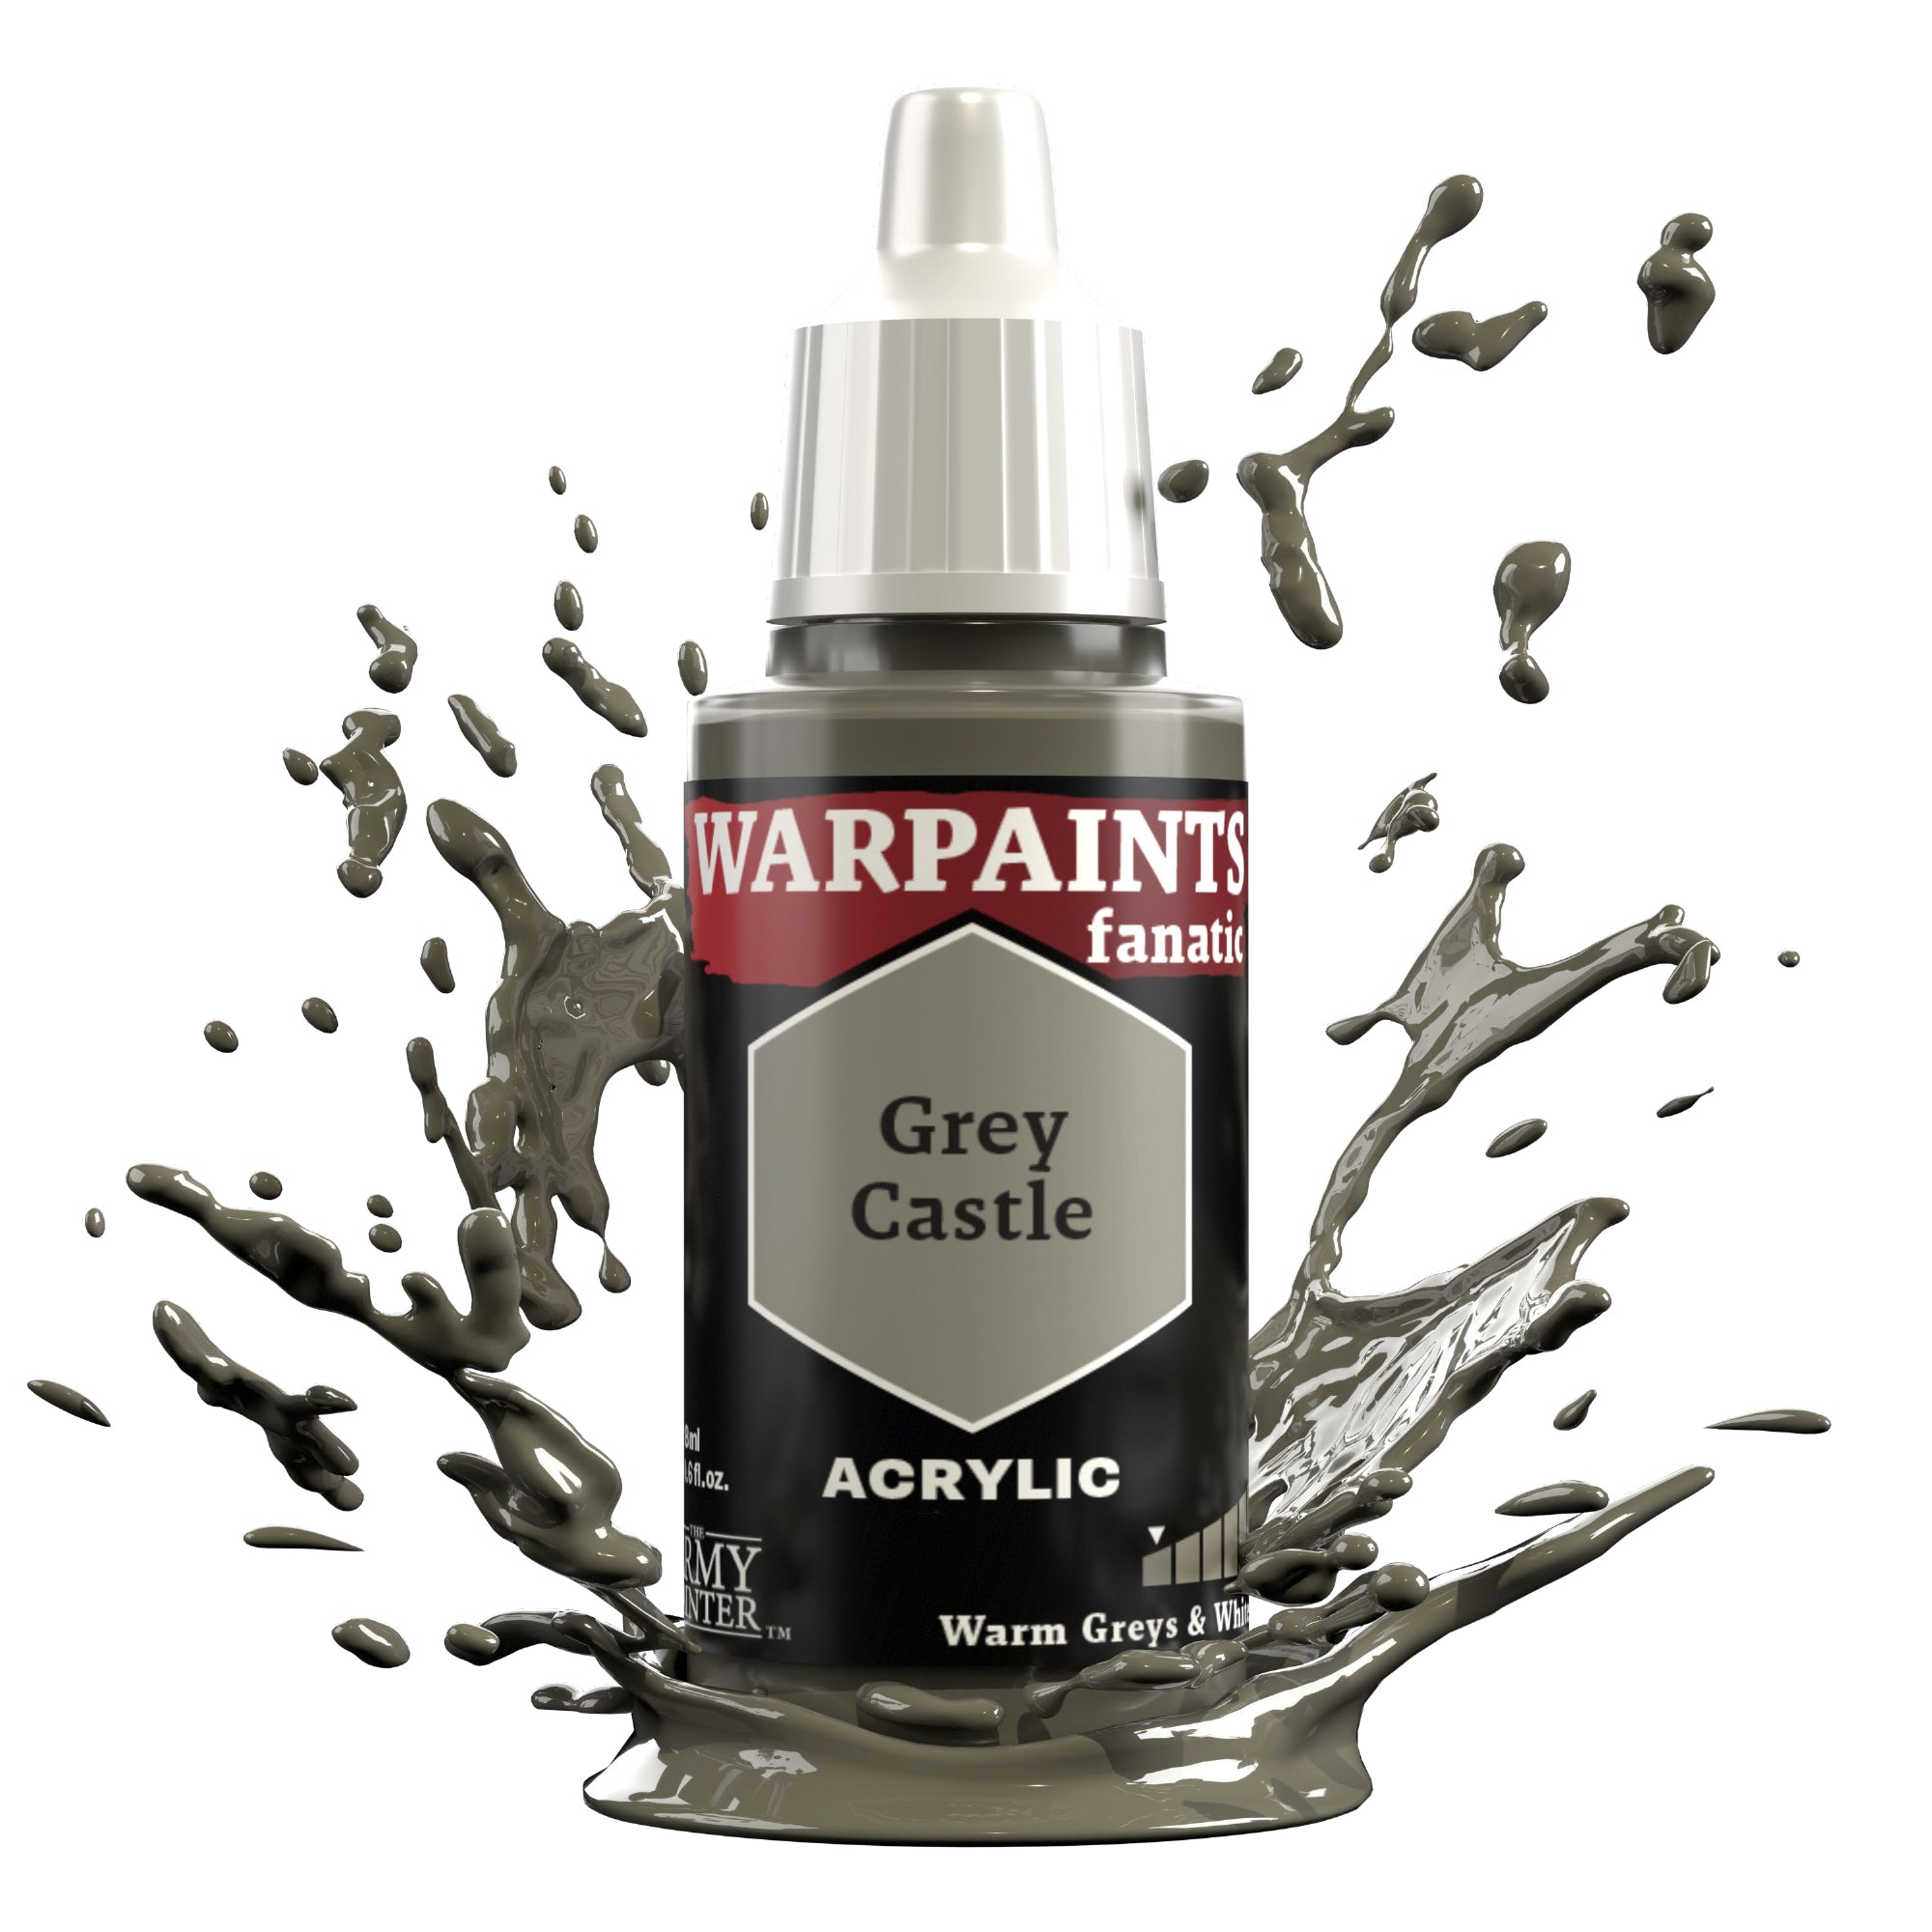 Warpaint Fanatics: Grey Castle